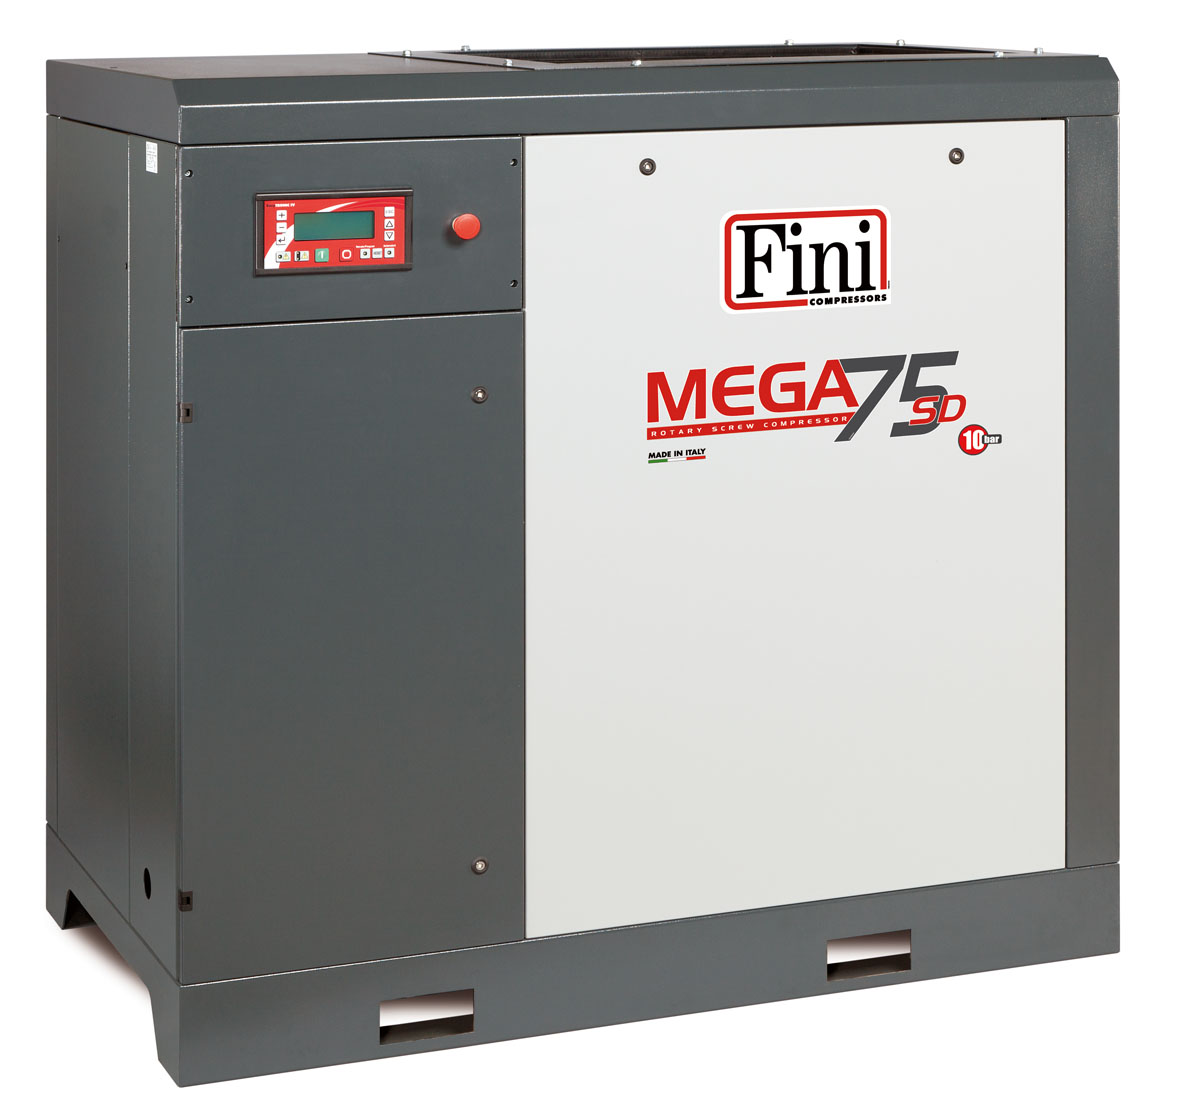 FINI компрессор MEGA SD 7508, 7510, 7513.